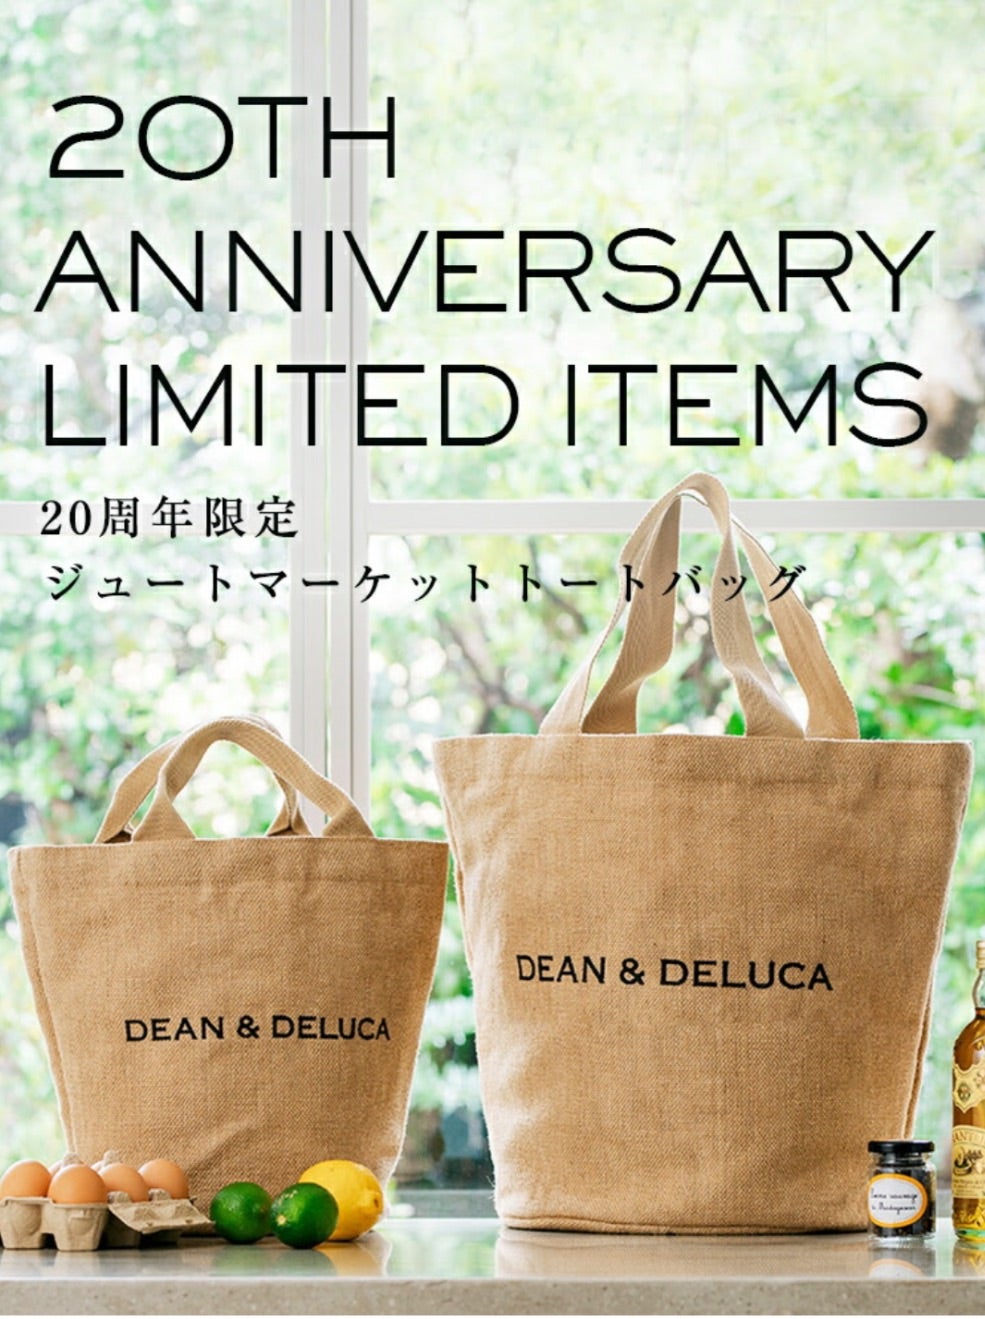 DEAN & DELUCA6月2日発売20周年限定ジュートマーケットトートバッグ 